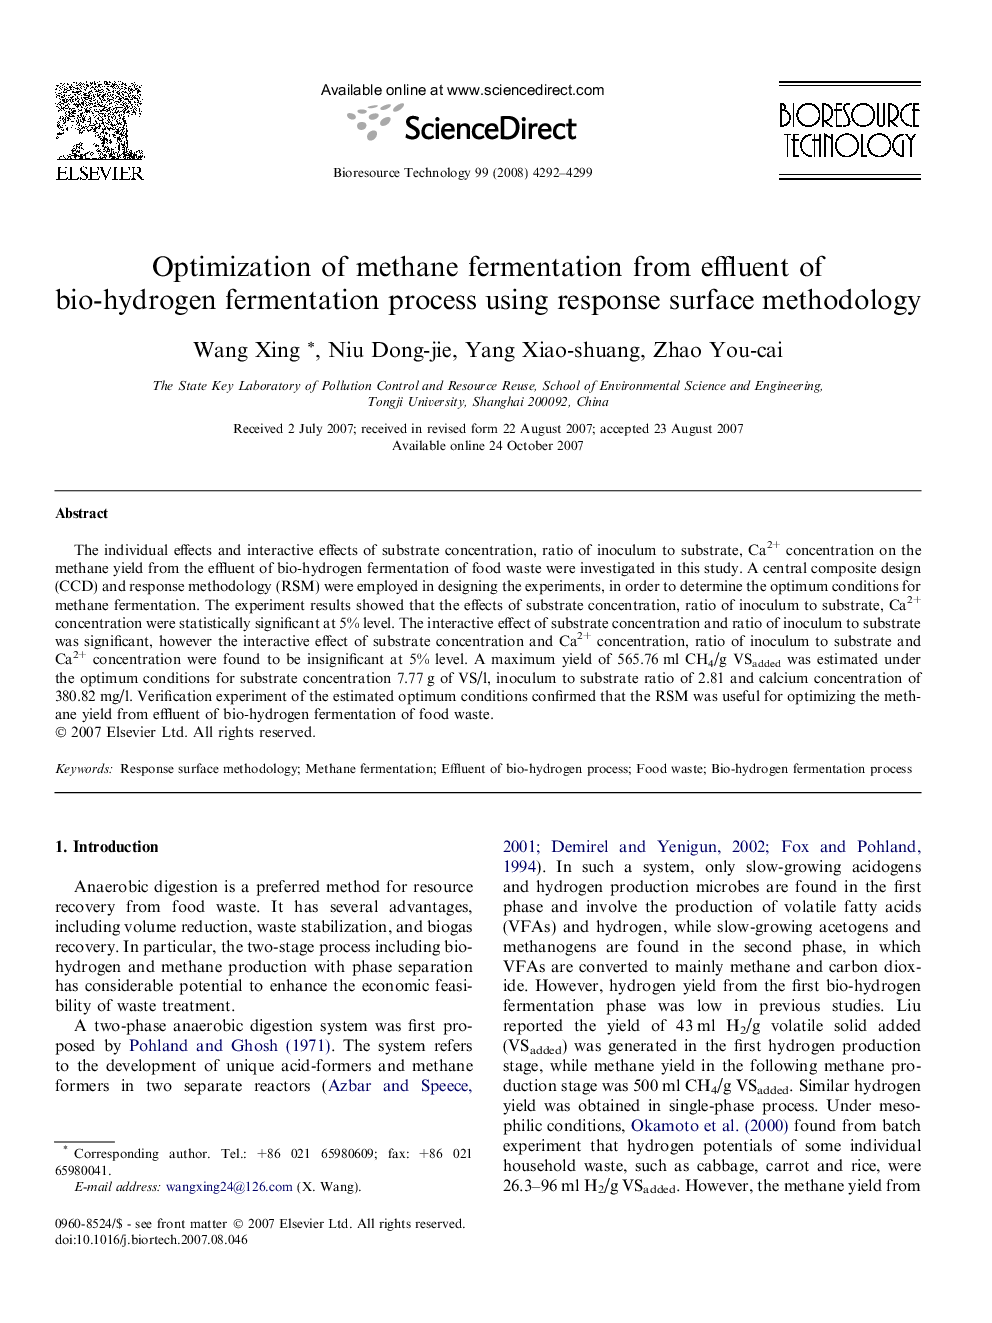 Optimization of methane fermentation from effluent of bio-hydrogen fermentation process using response surface methodology